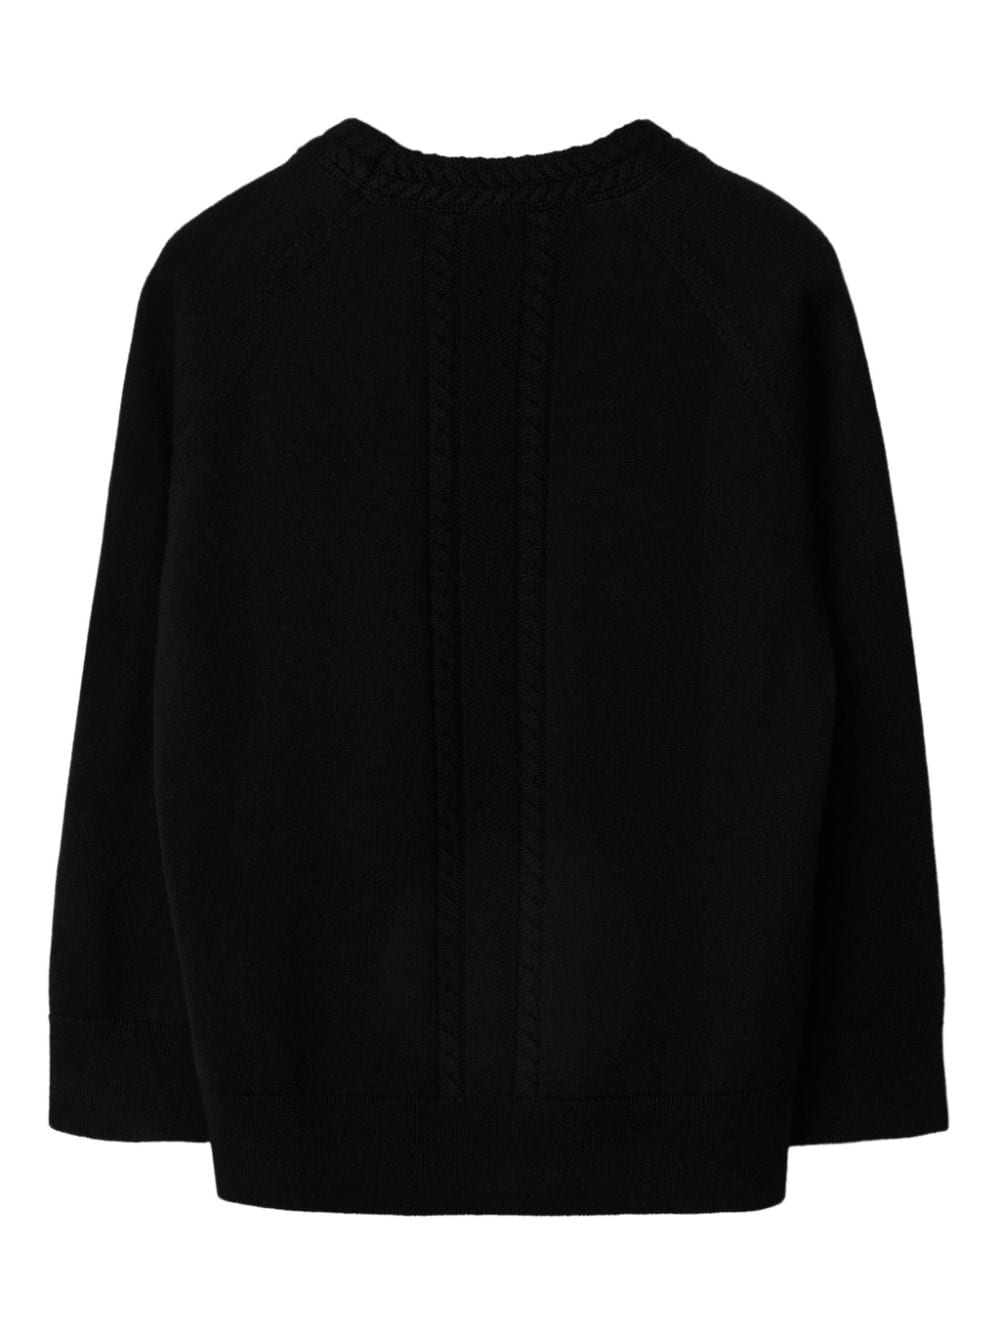 Unisex black wool cardigan